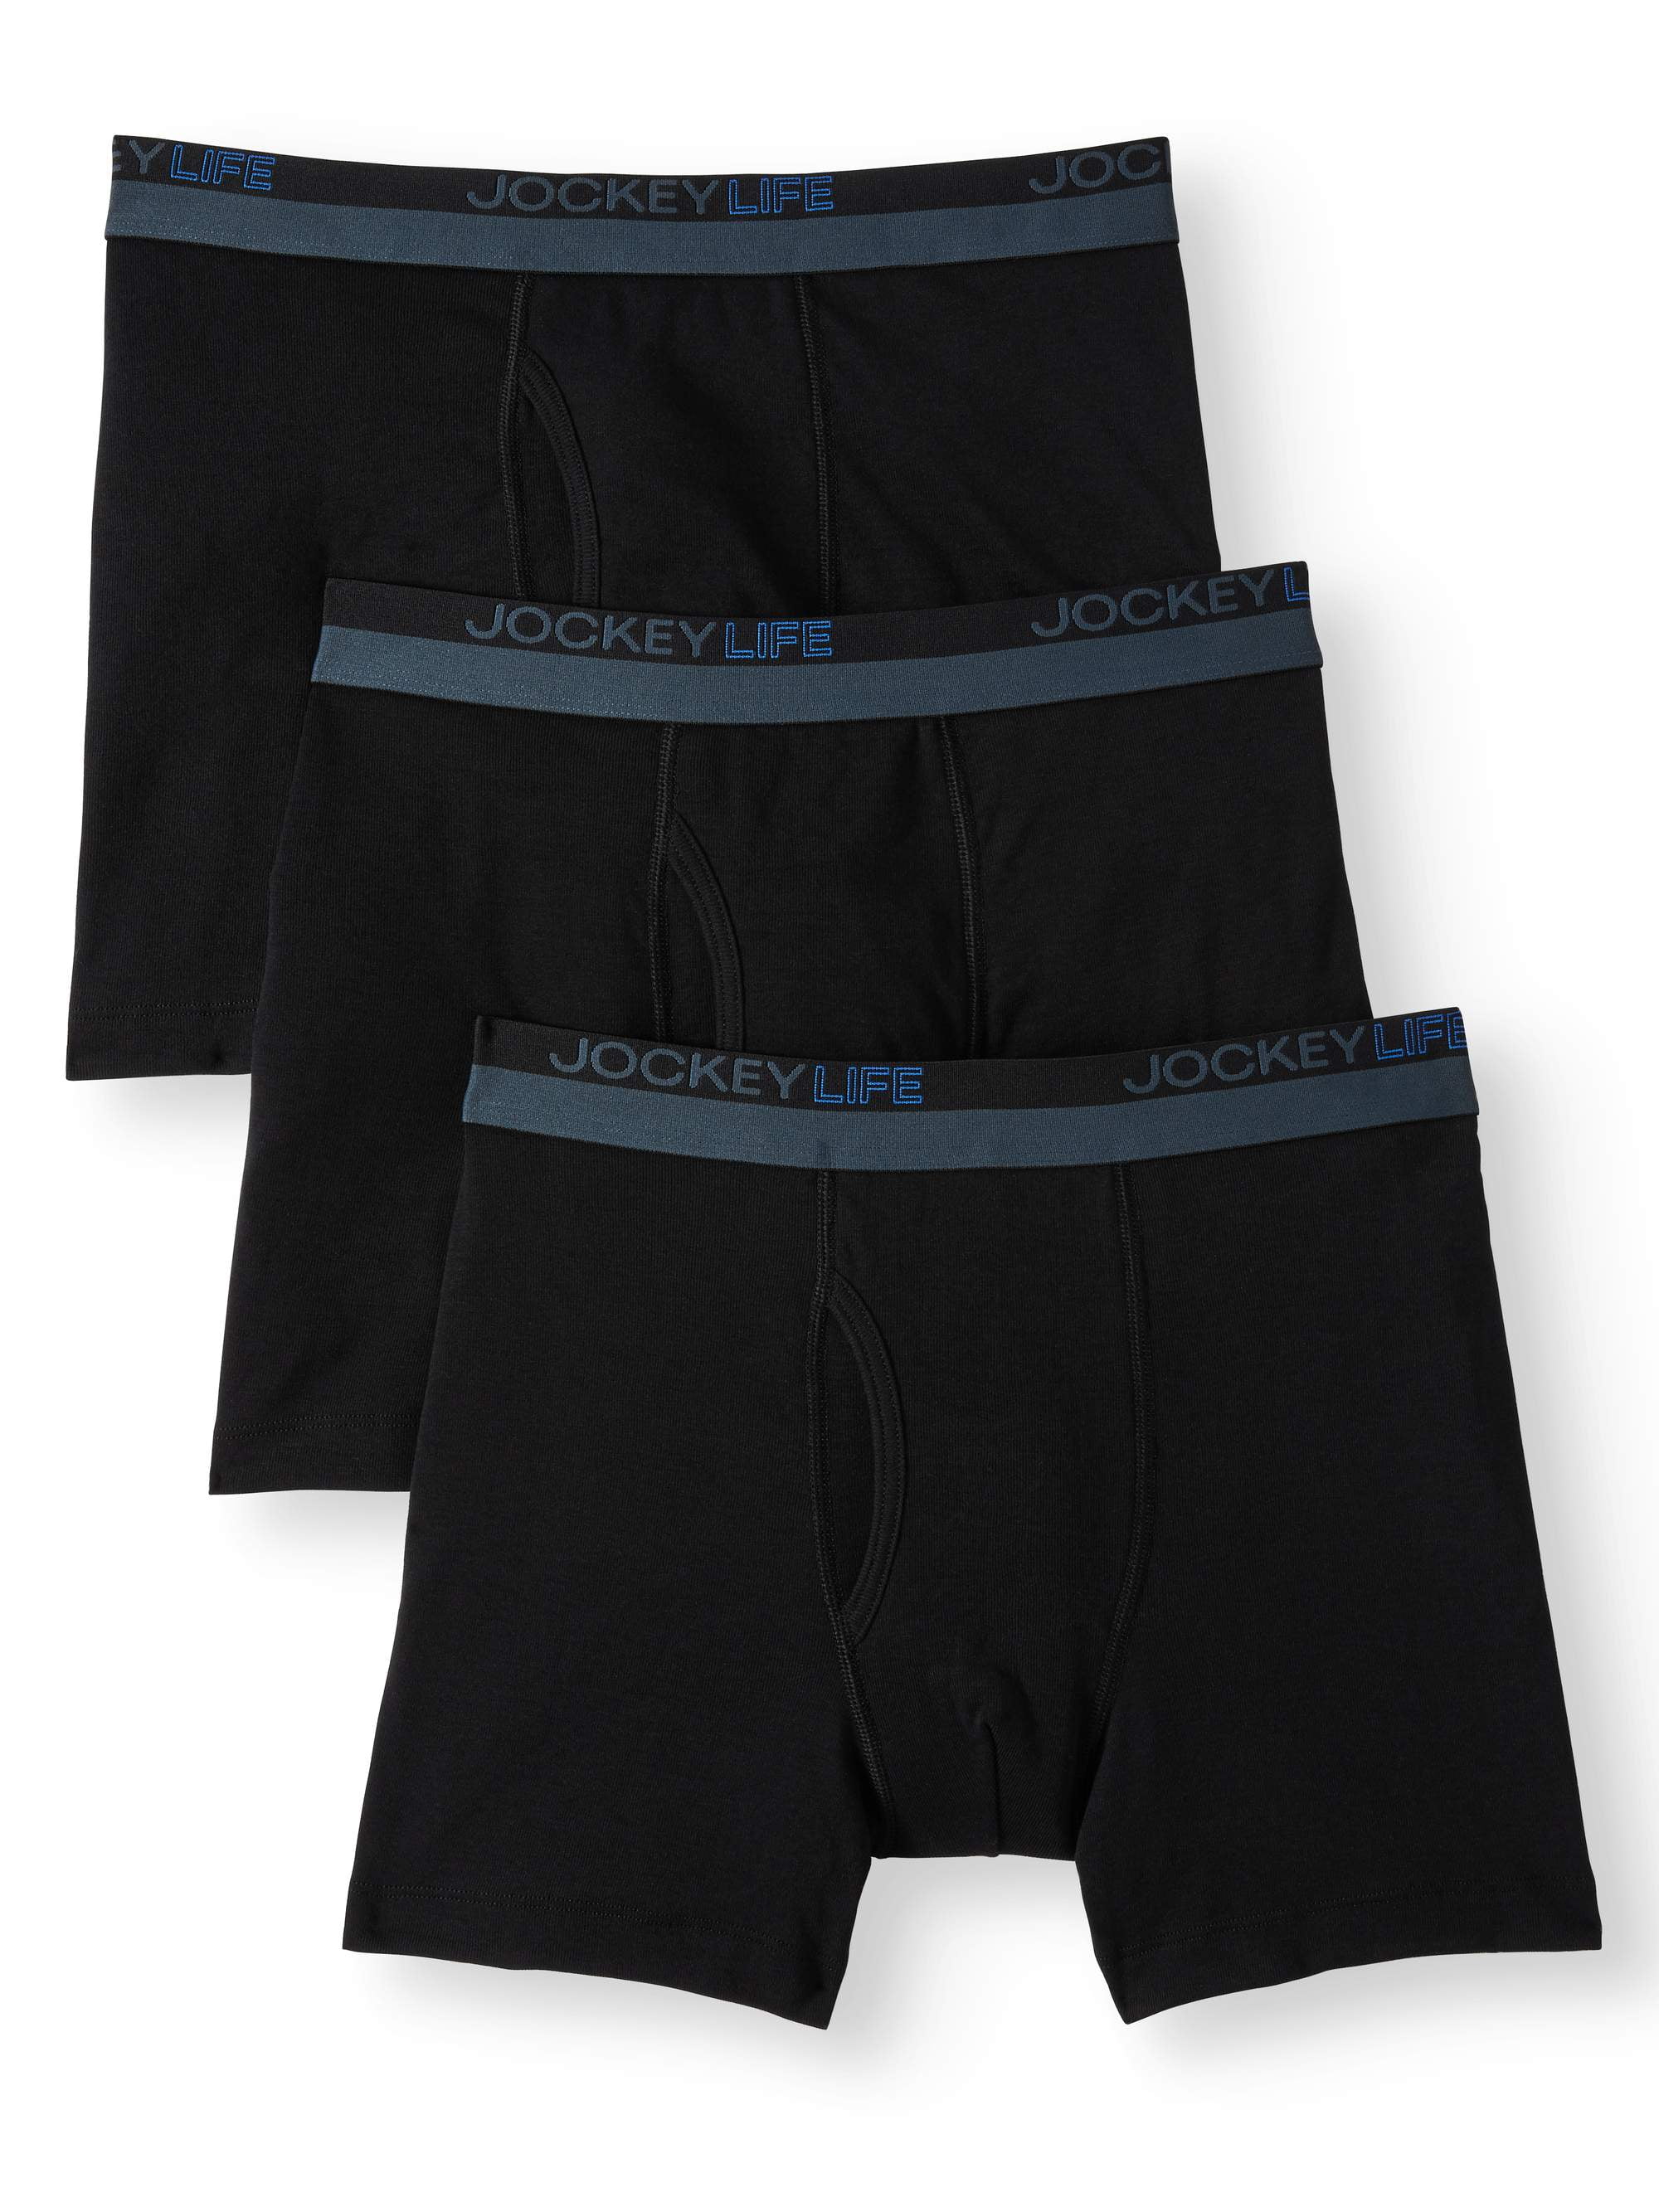 Jockey Life Men's 24/7 Comfort Cotton Blend Boxer Brief, 3-Pack